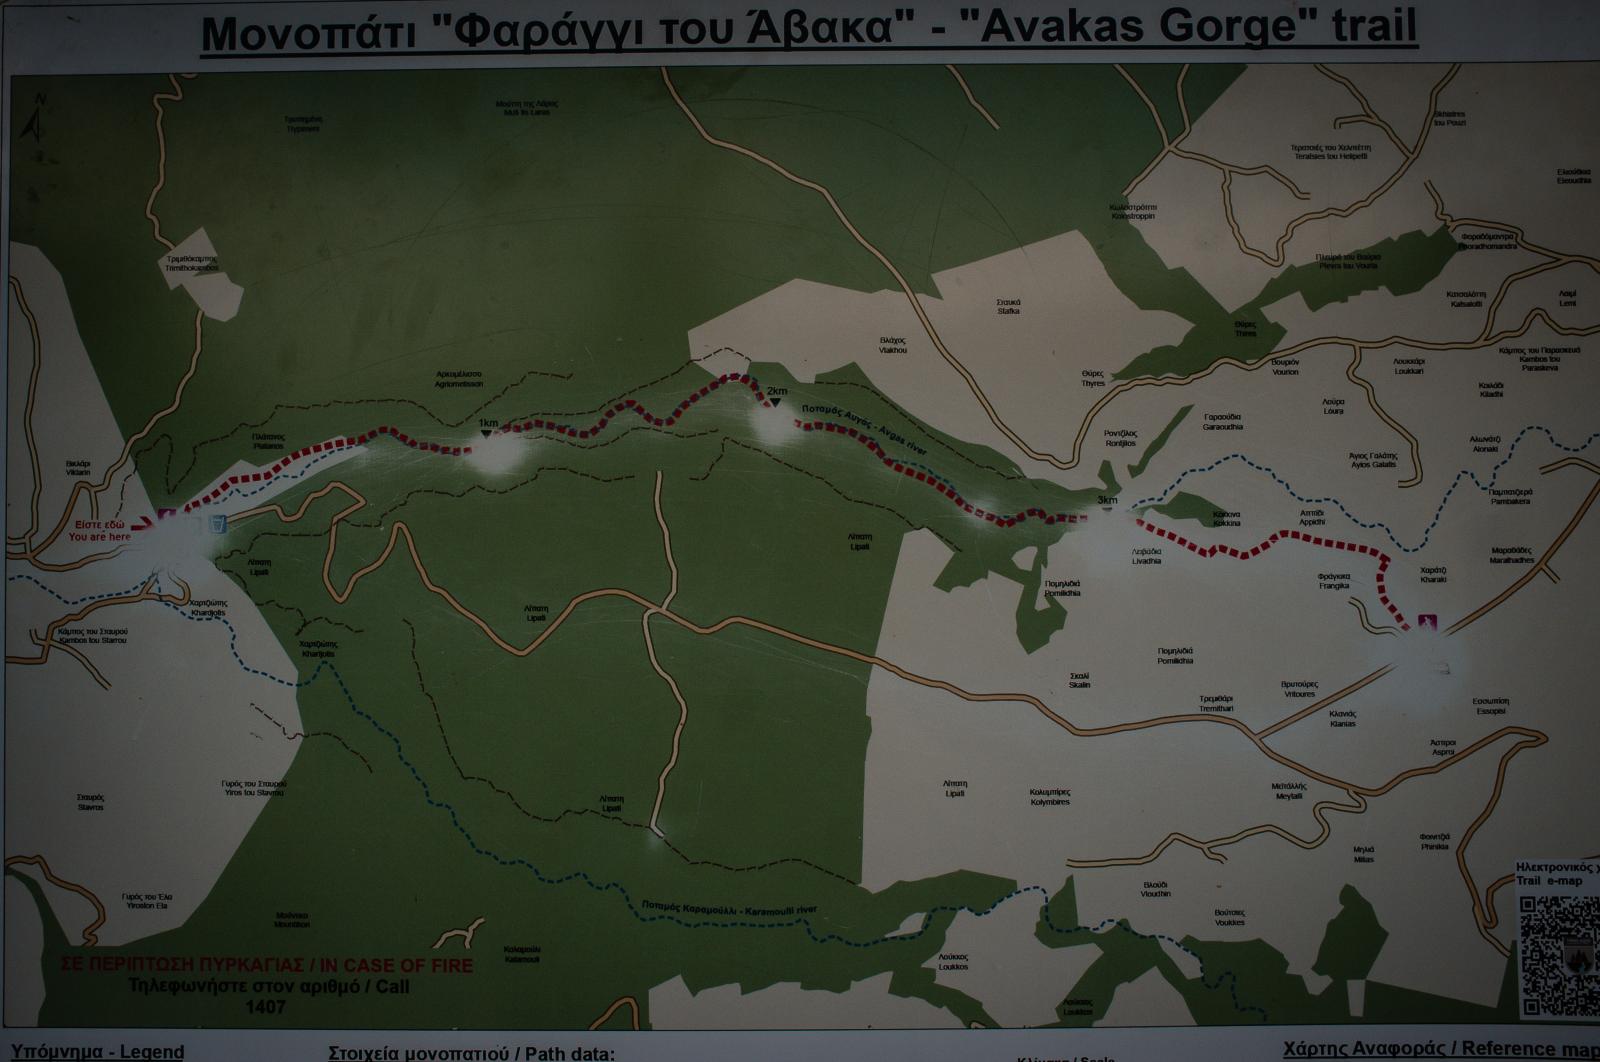 Sign indicating Avakas Gorge tr...tiful landscape and vegetation.